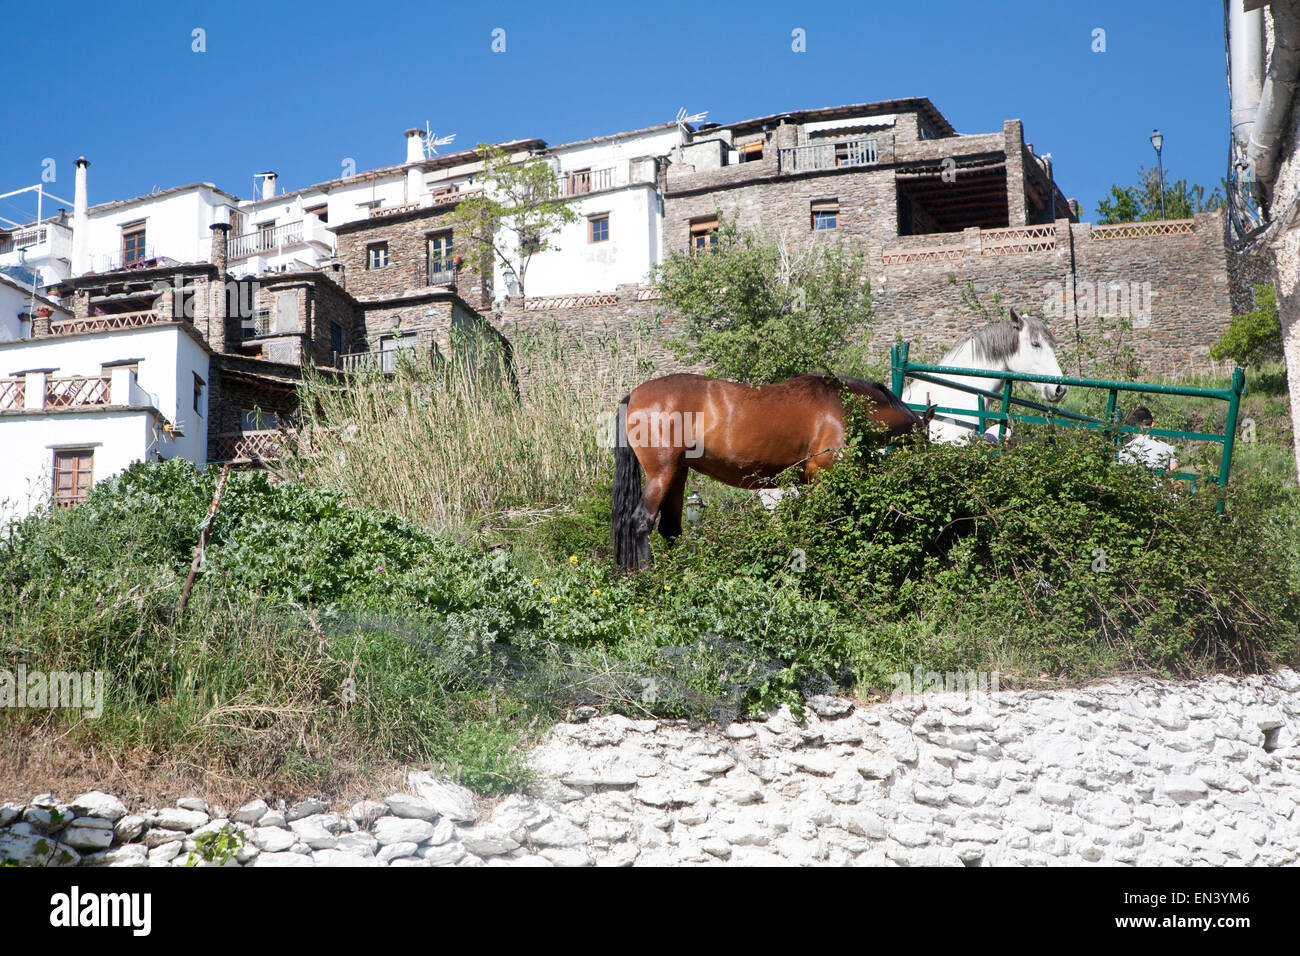 Horses in the village of Bubion, High Alpujarras, Sierra Nevada, Granada province, Spain Stock Photo